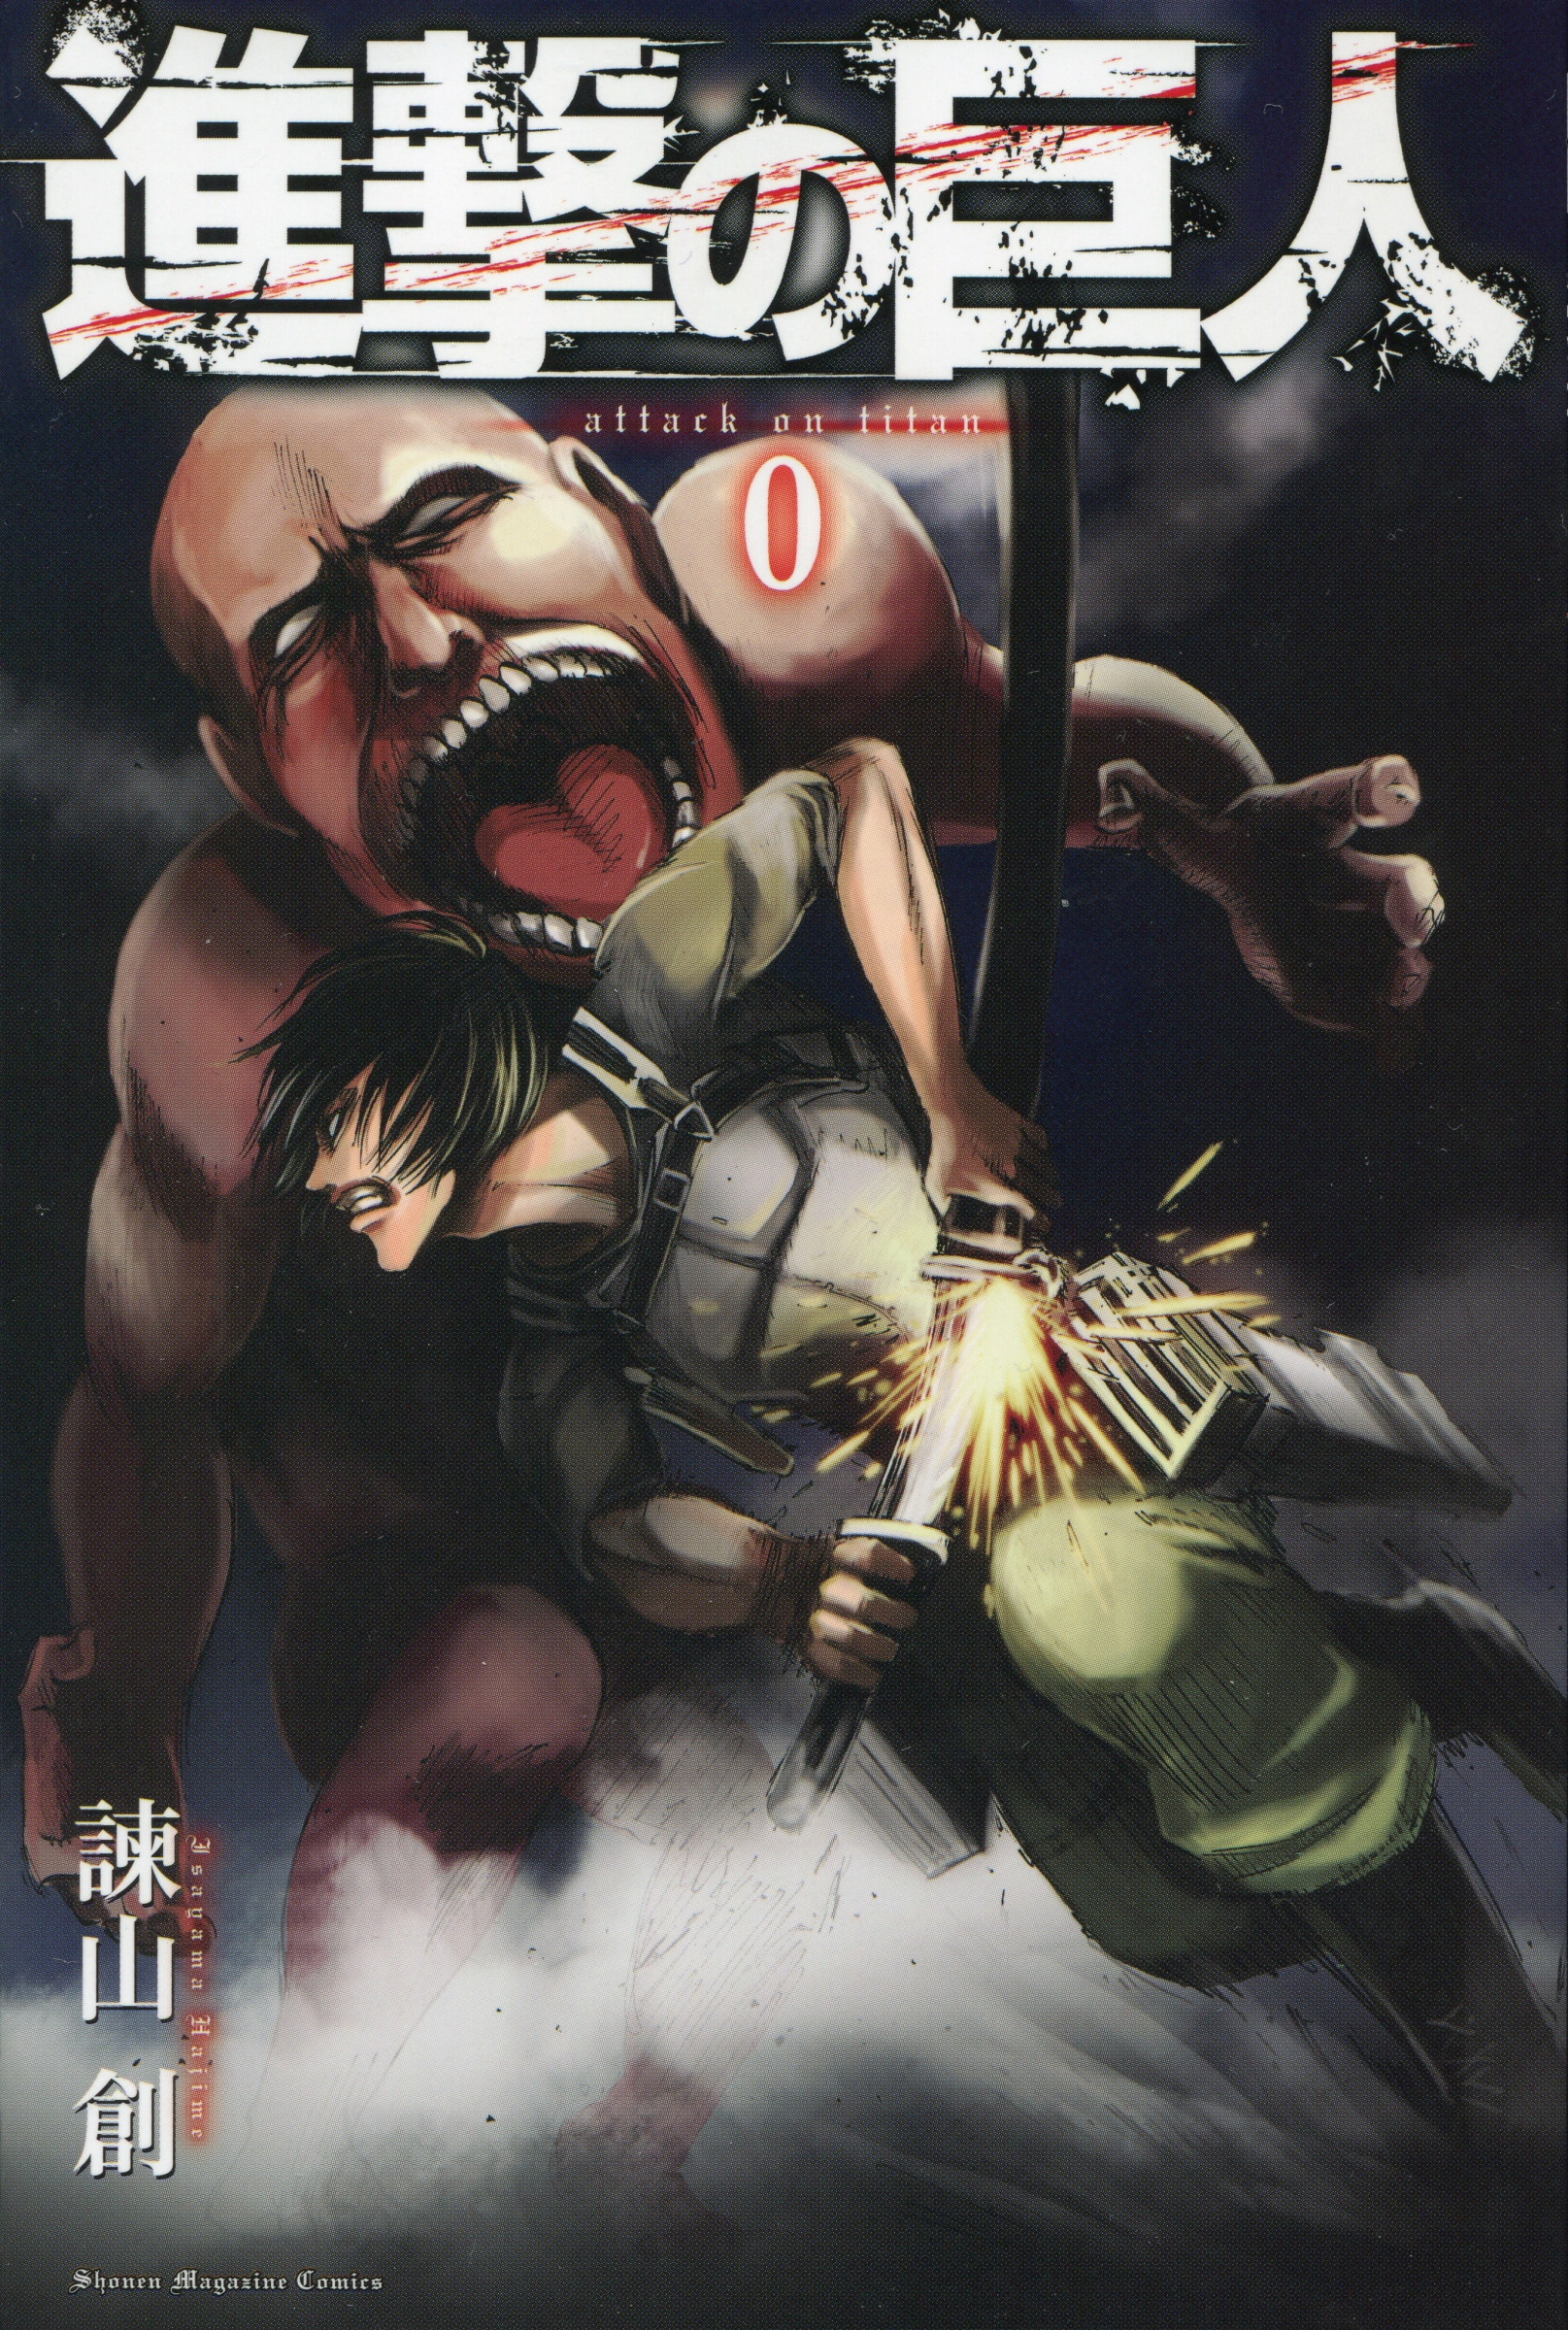 Attack on Titan original draft volume 0 cover